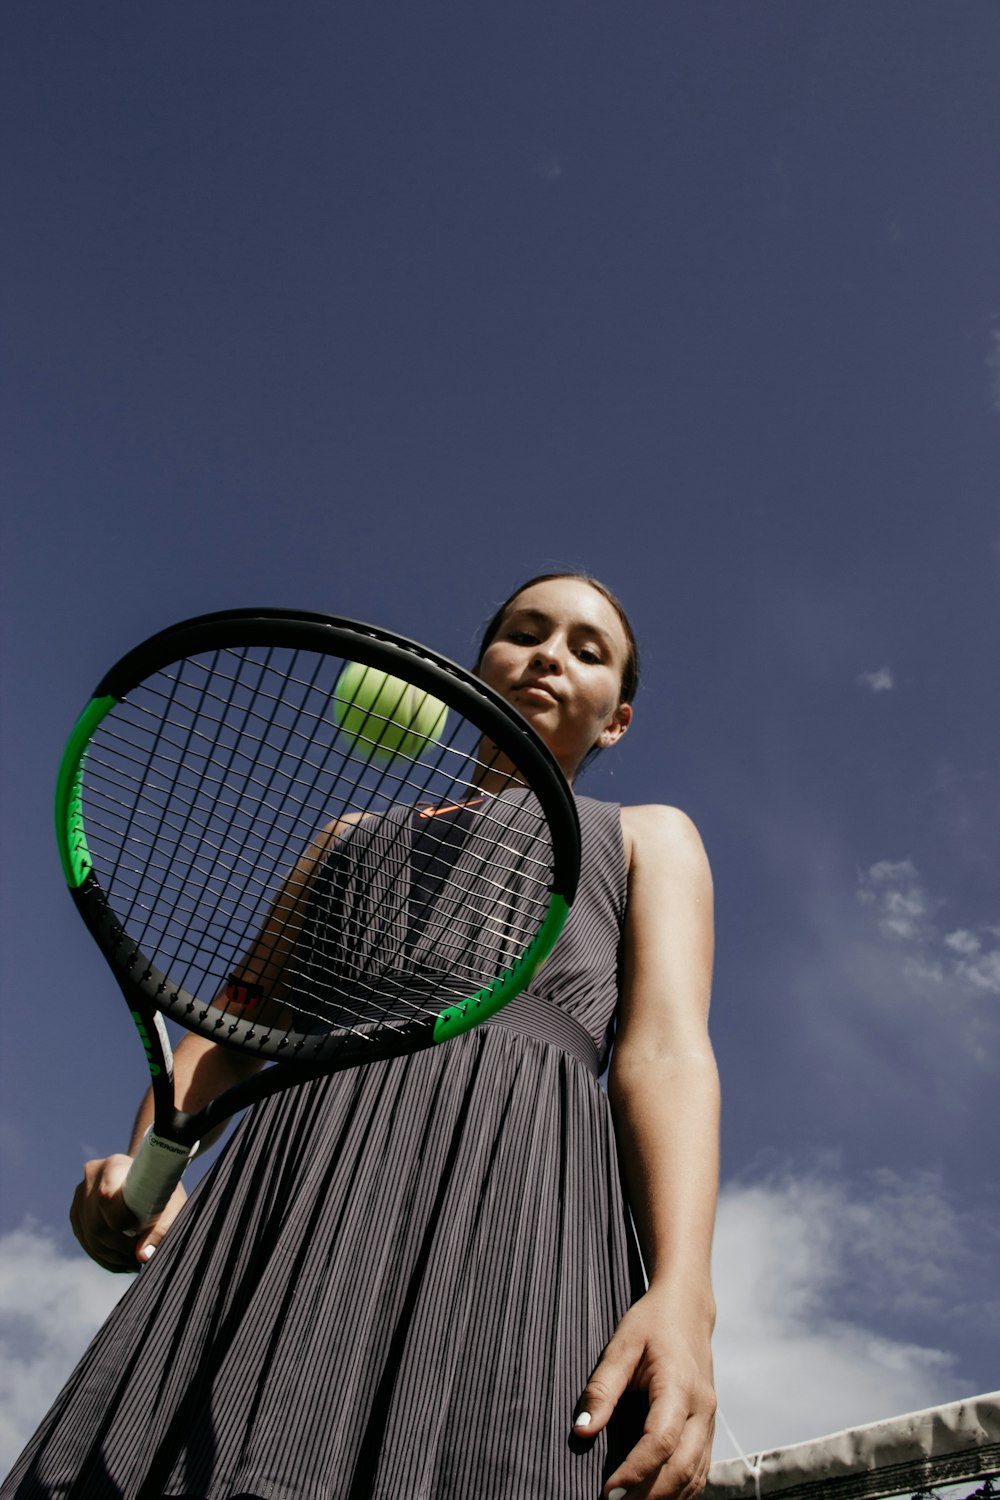 woman holding tennis racket